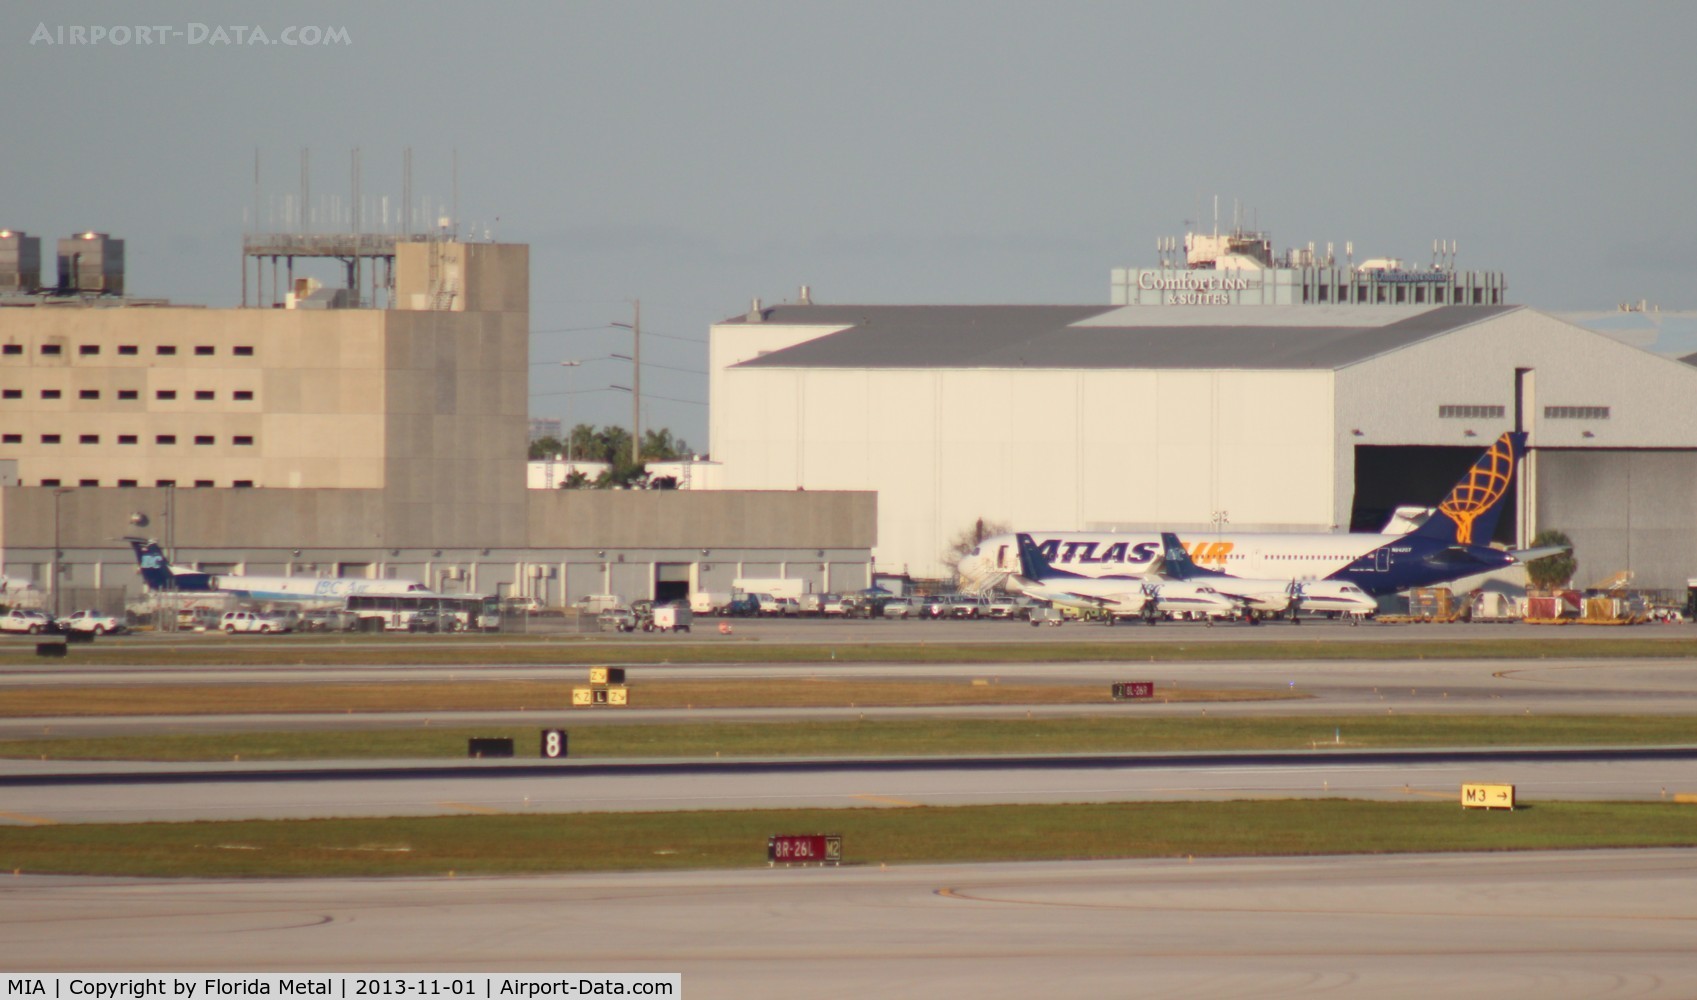 Miami International Airport (MIA) - Maintenance area and IBC parking